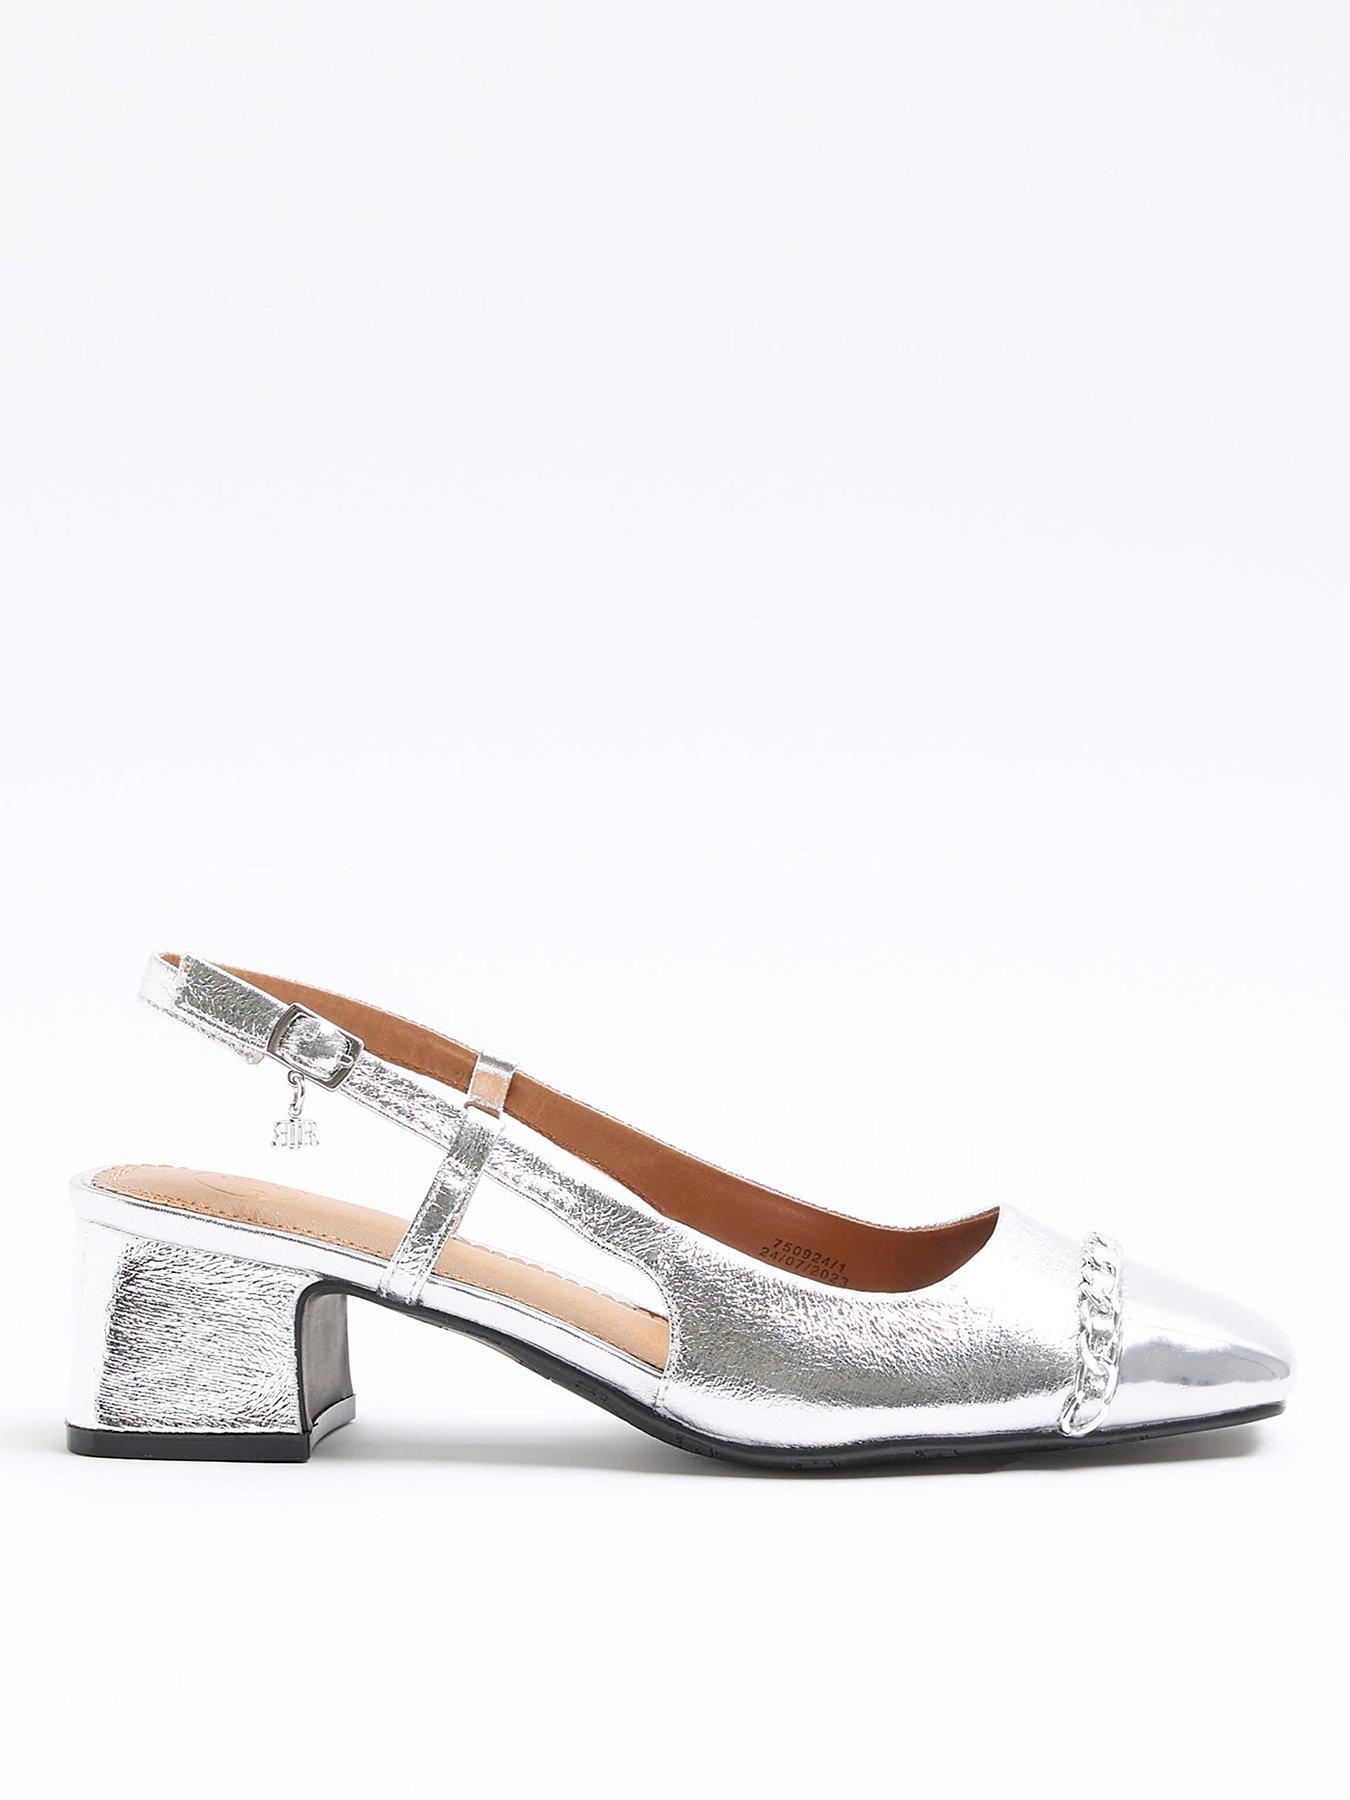 Sezane | Shoes | New Sezane Low Helena Courts Silver Glitter Block Heels |  Poshmark